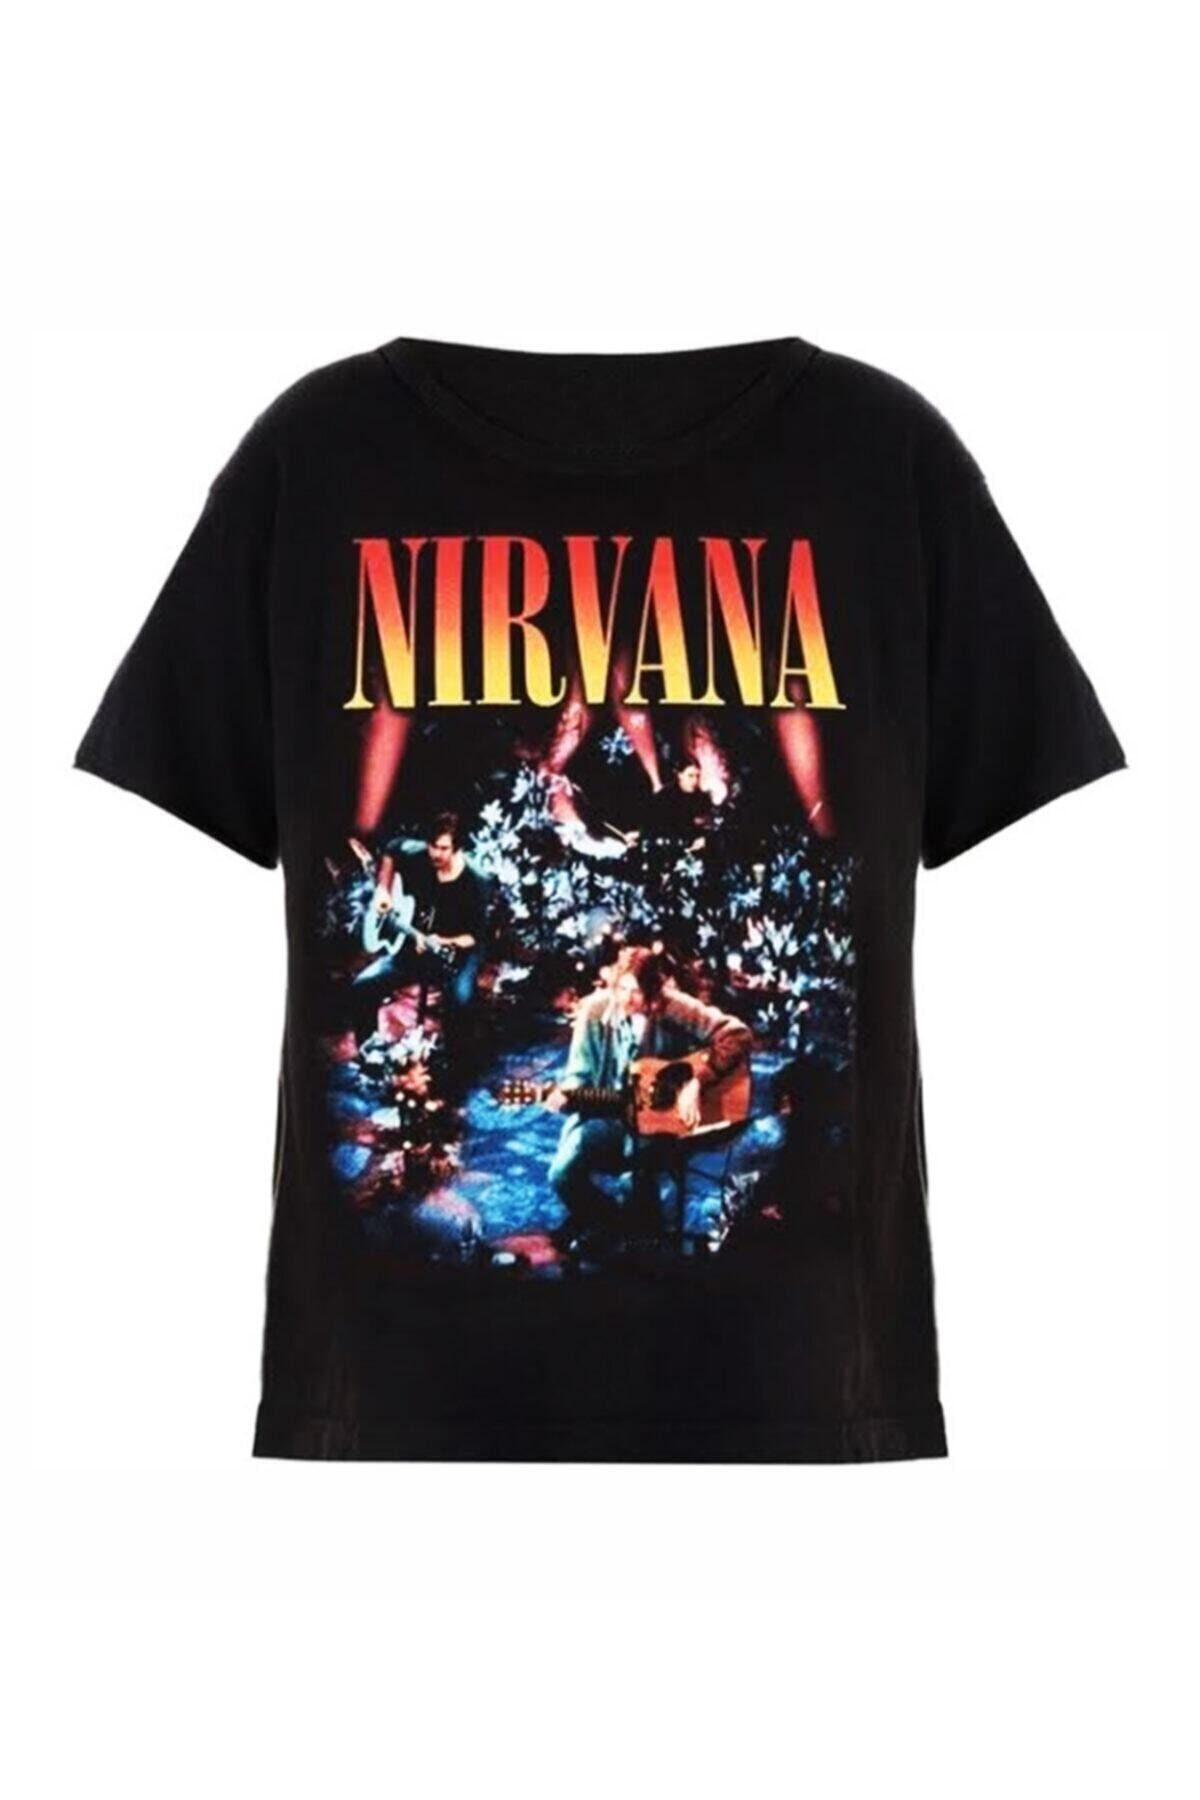 Köstebek Nirvana - ( Kurt Cobain ) Mtv Unplugged Unisex T-shirt